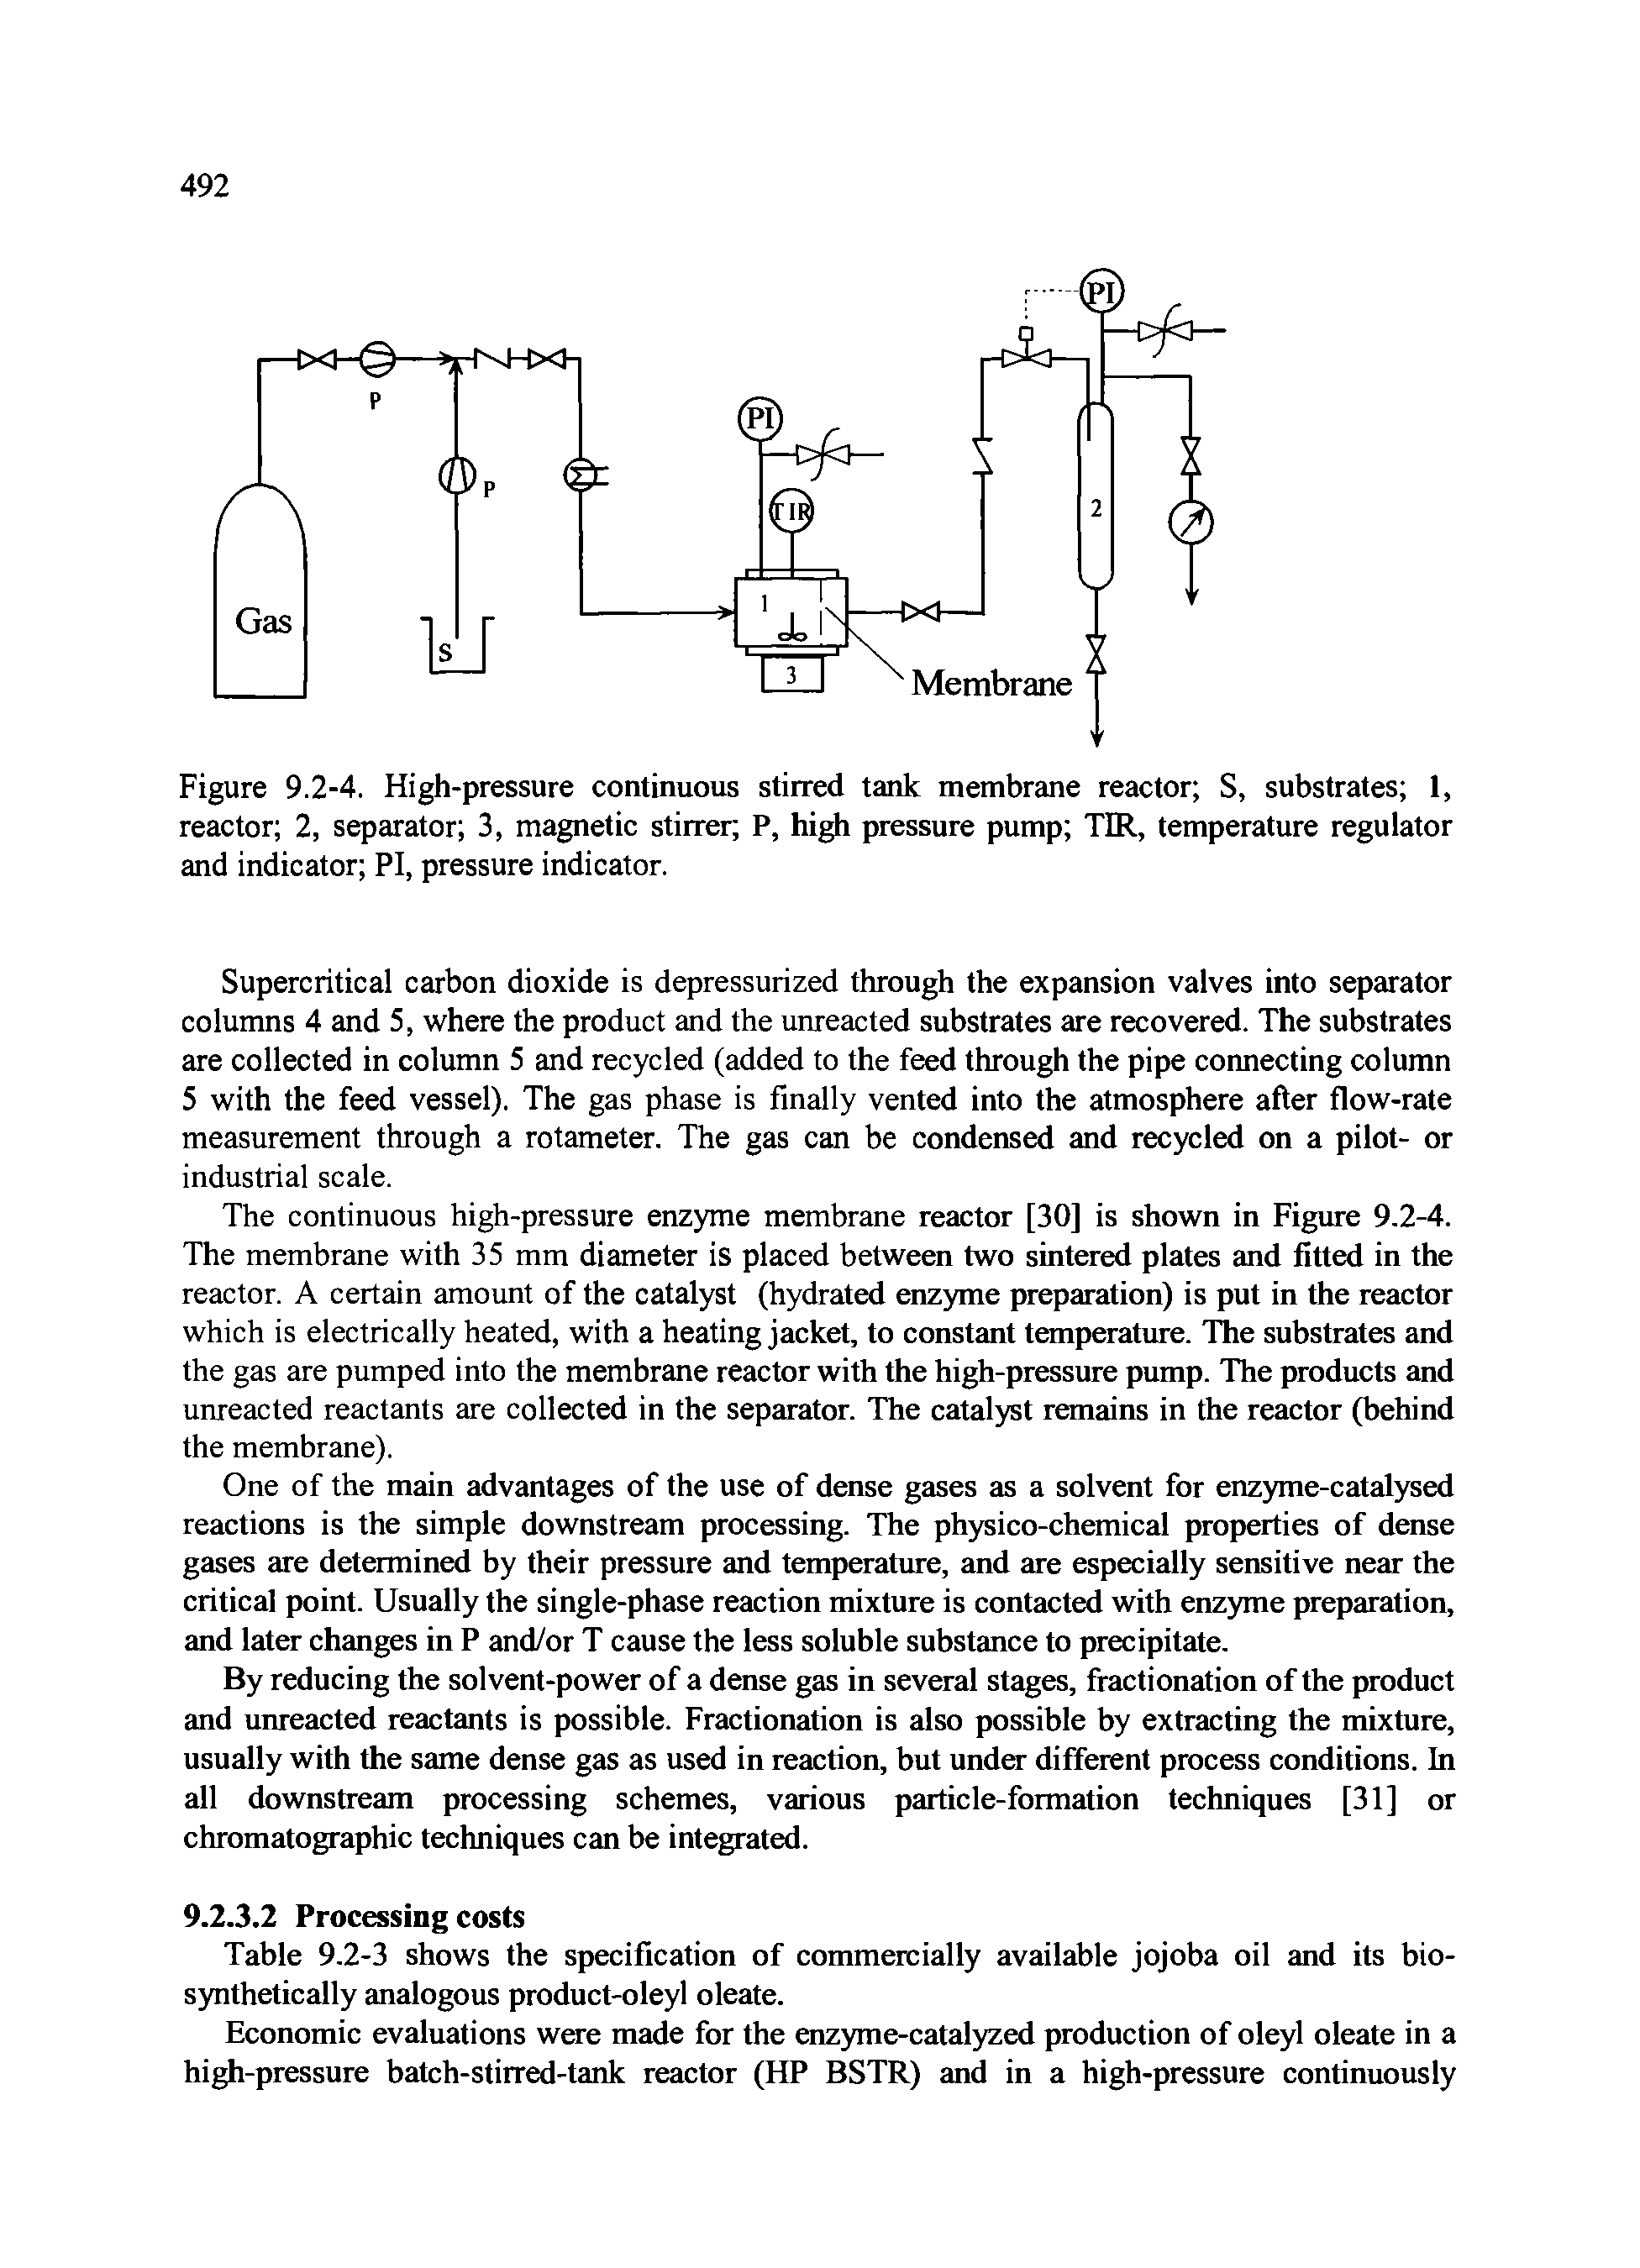 Figure 9.2-4. High-pressure continuous stirred tank membrane reactor S, substrates 1, reactor 2, separator 3, magnetic stirrer P, high pressure pump TIR, temperature regulator and indicator PI, pressure indicator.